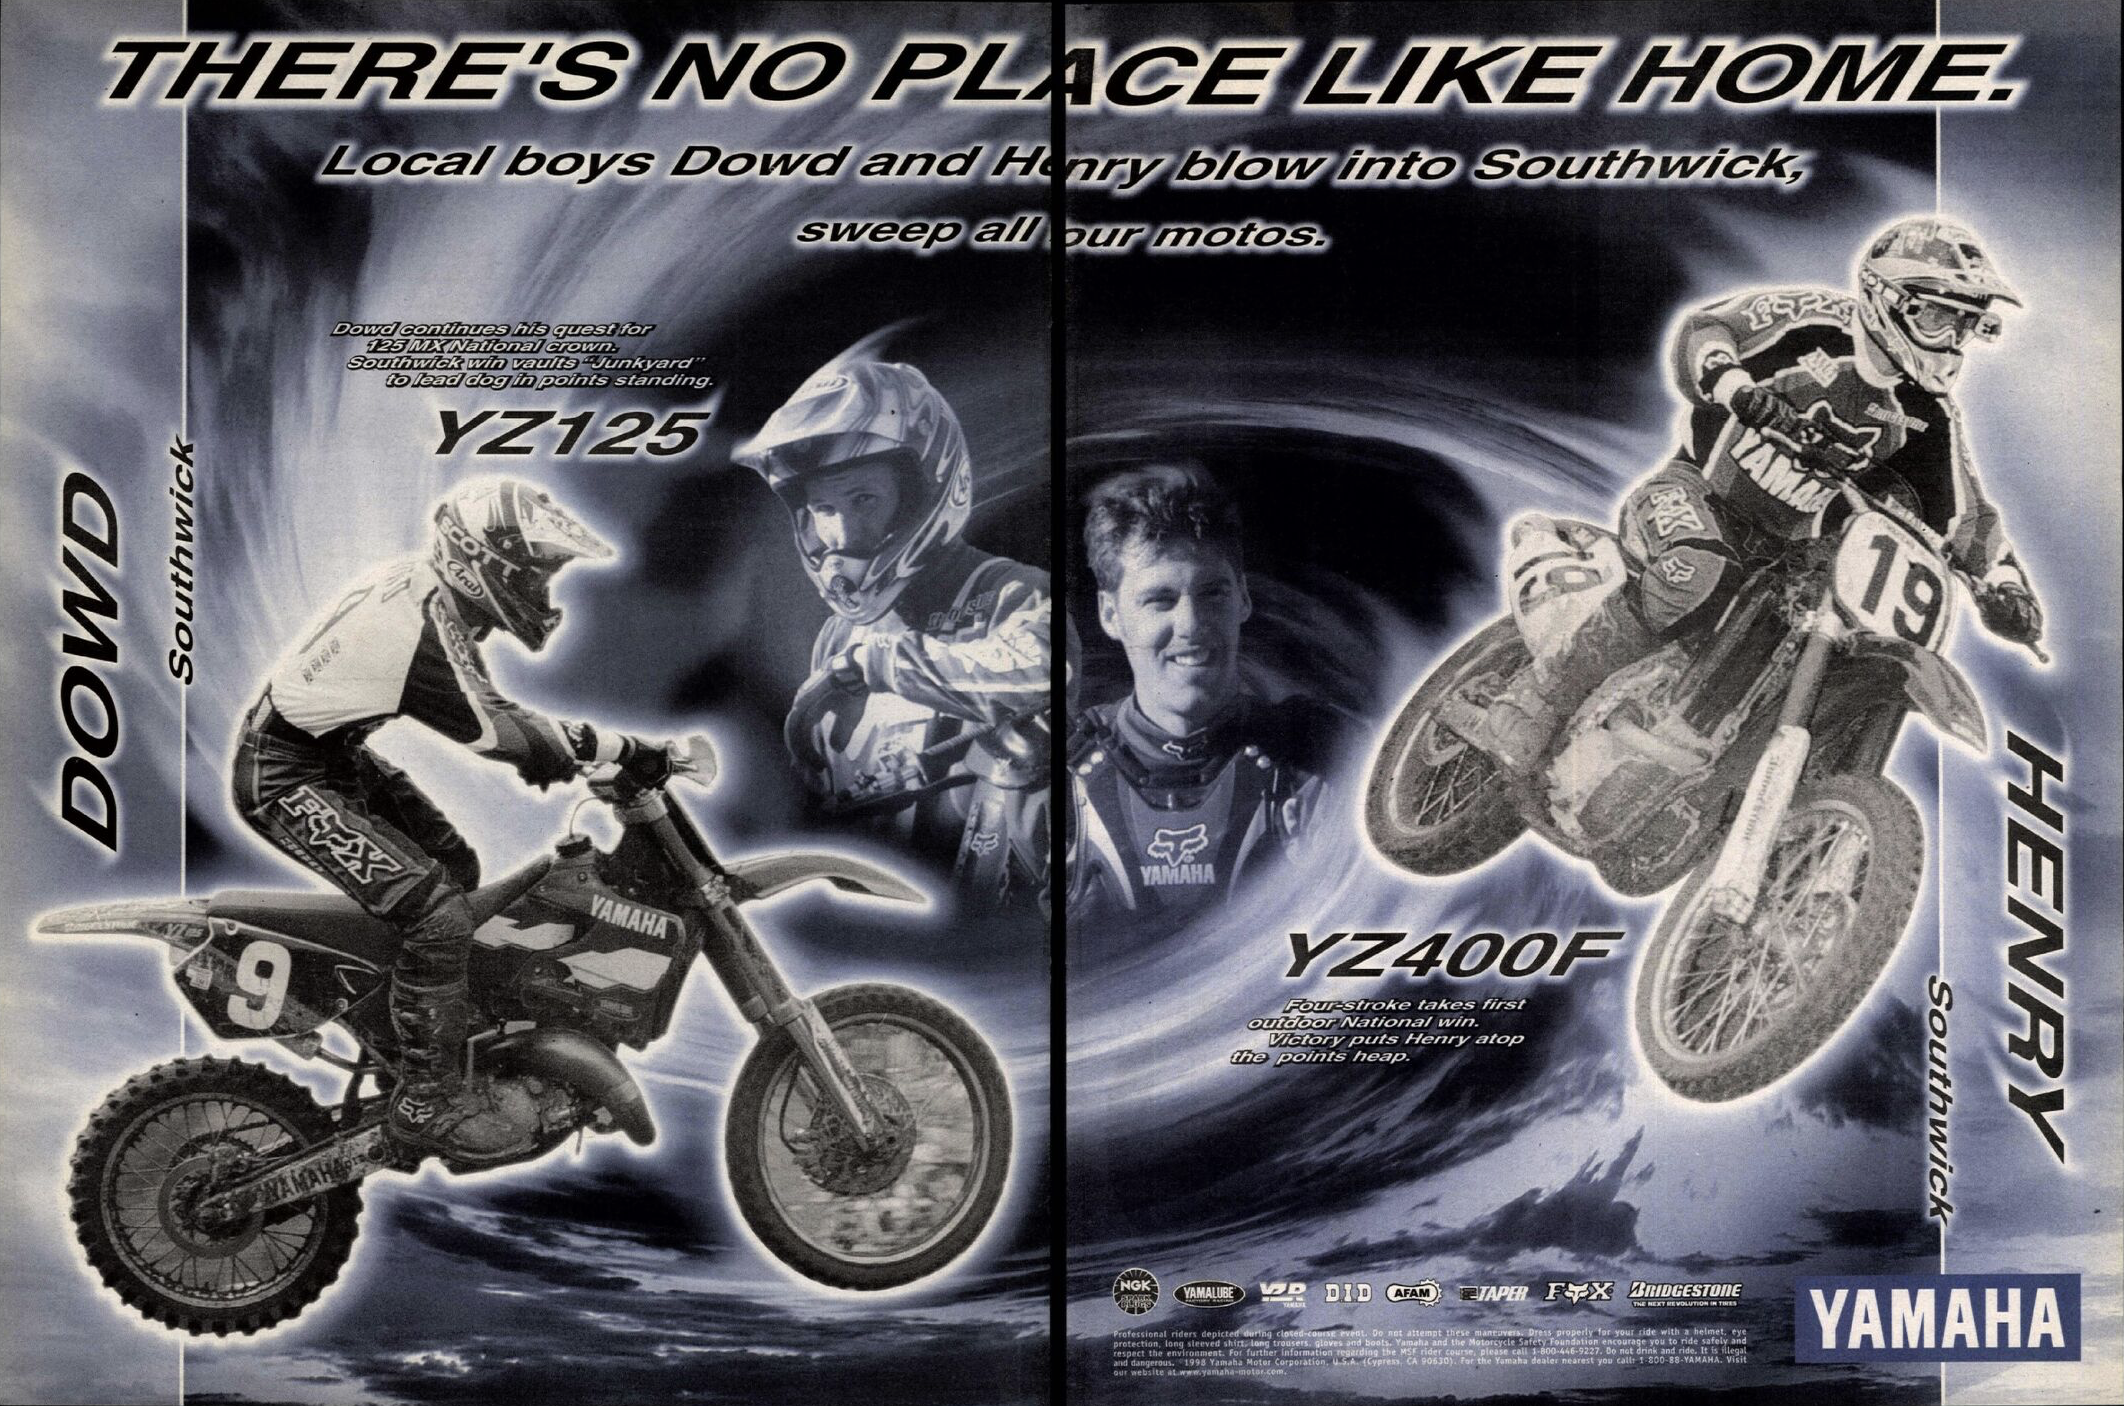 TEN THINGS ABOUT MODERN MOTOCROSS GEAR - Motocross Action Magazine